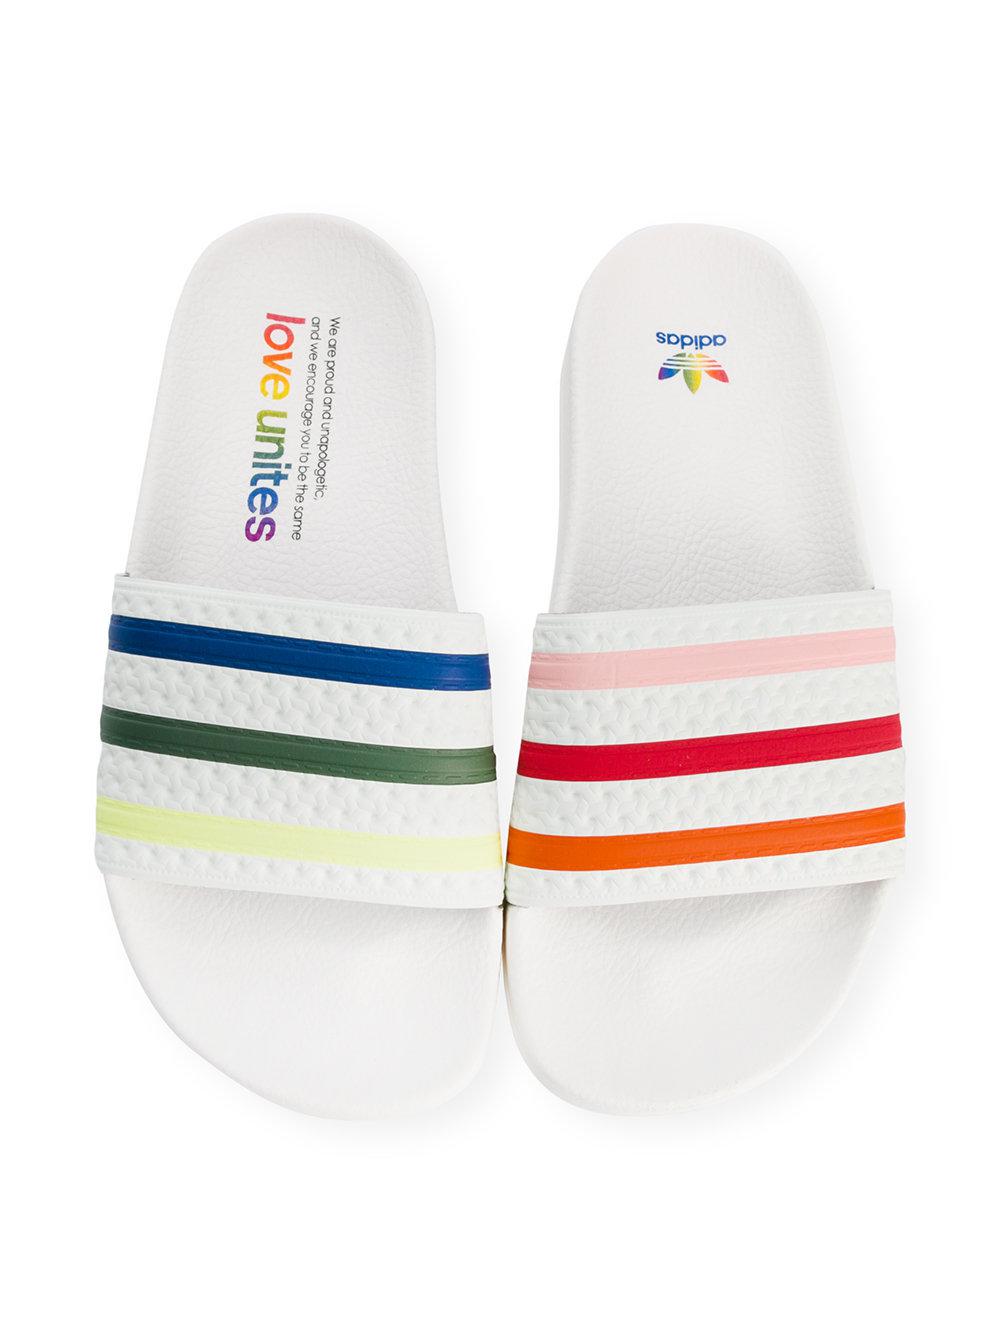 adidas pride slippers